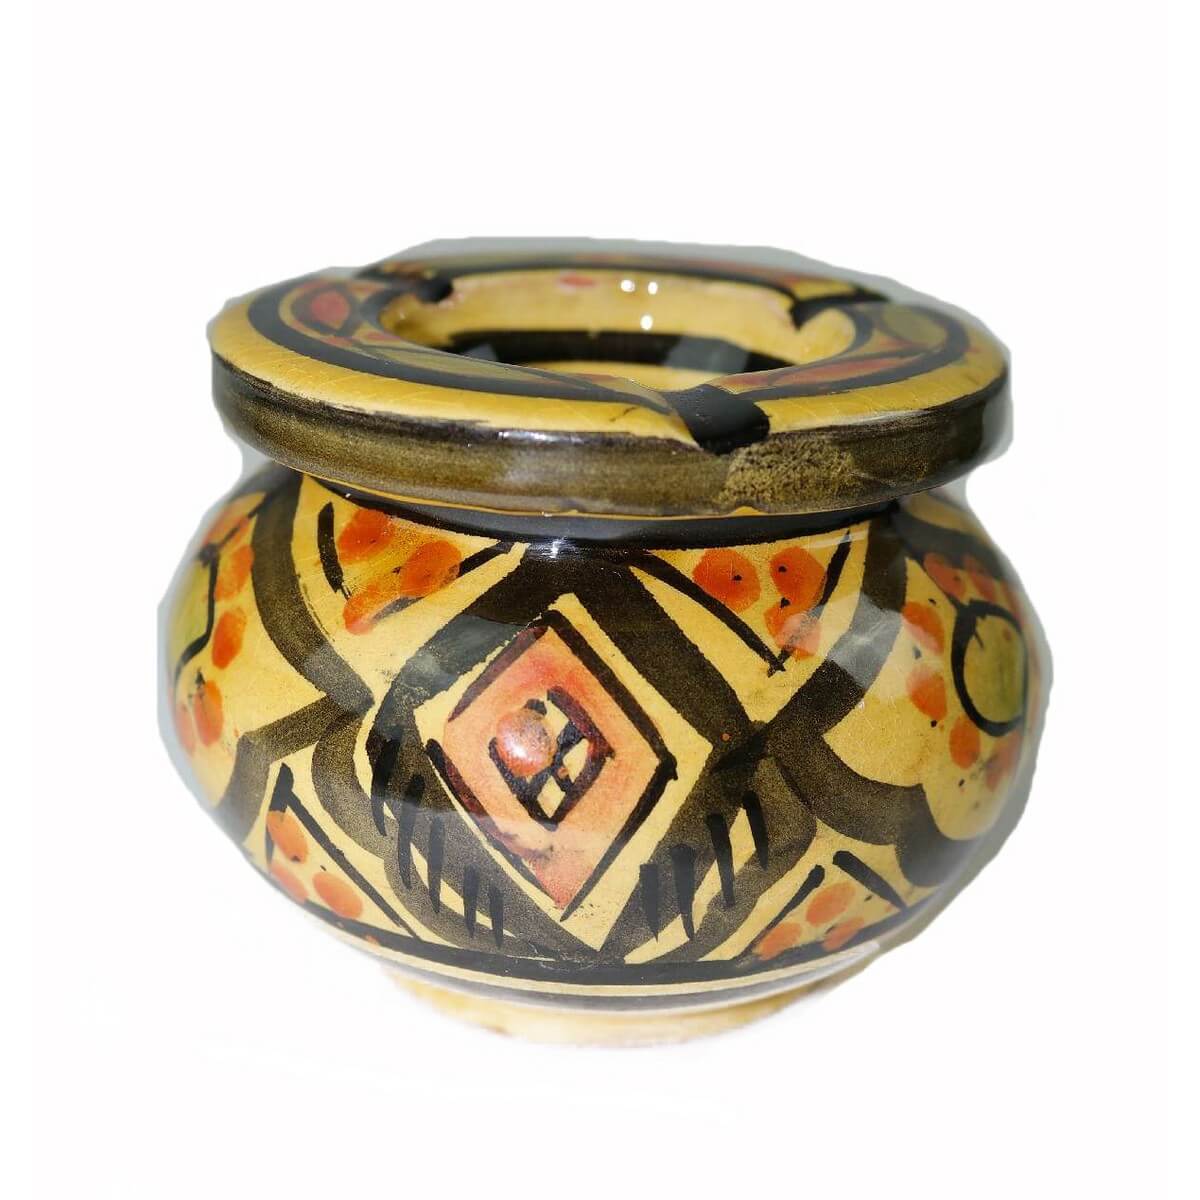 Aschenbecher, Marokko, Keramik, Muster, Souvenir, handgefertigt, bunt, Haus  Stockfotografie - Alamy